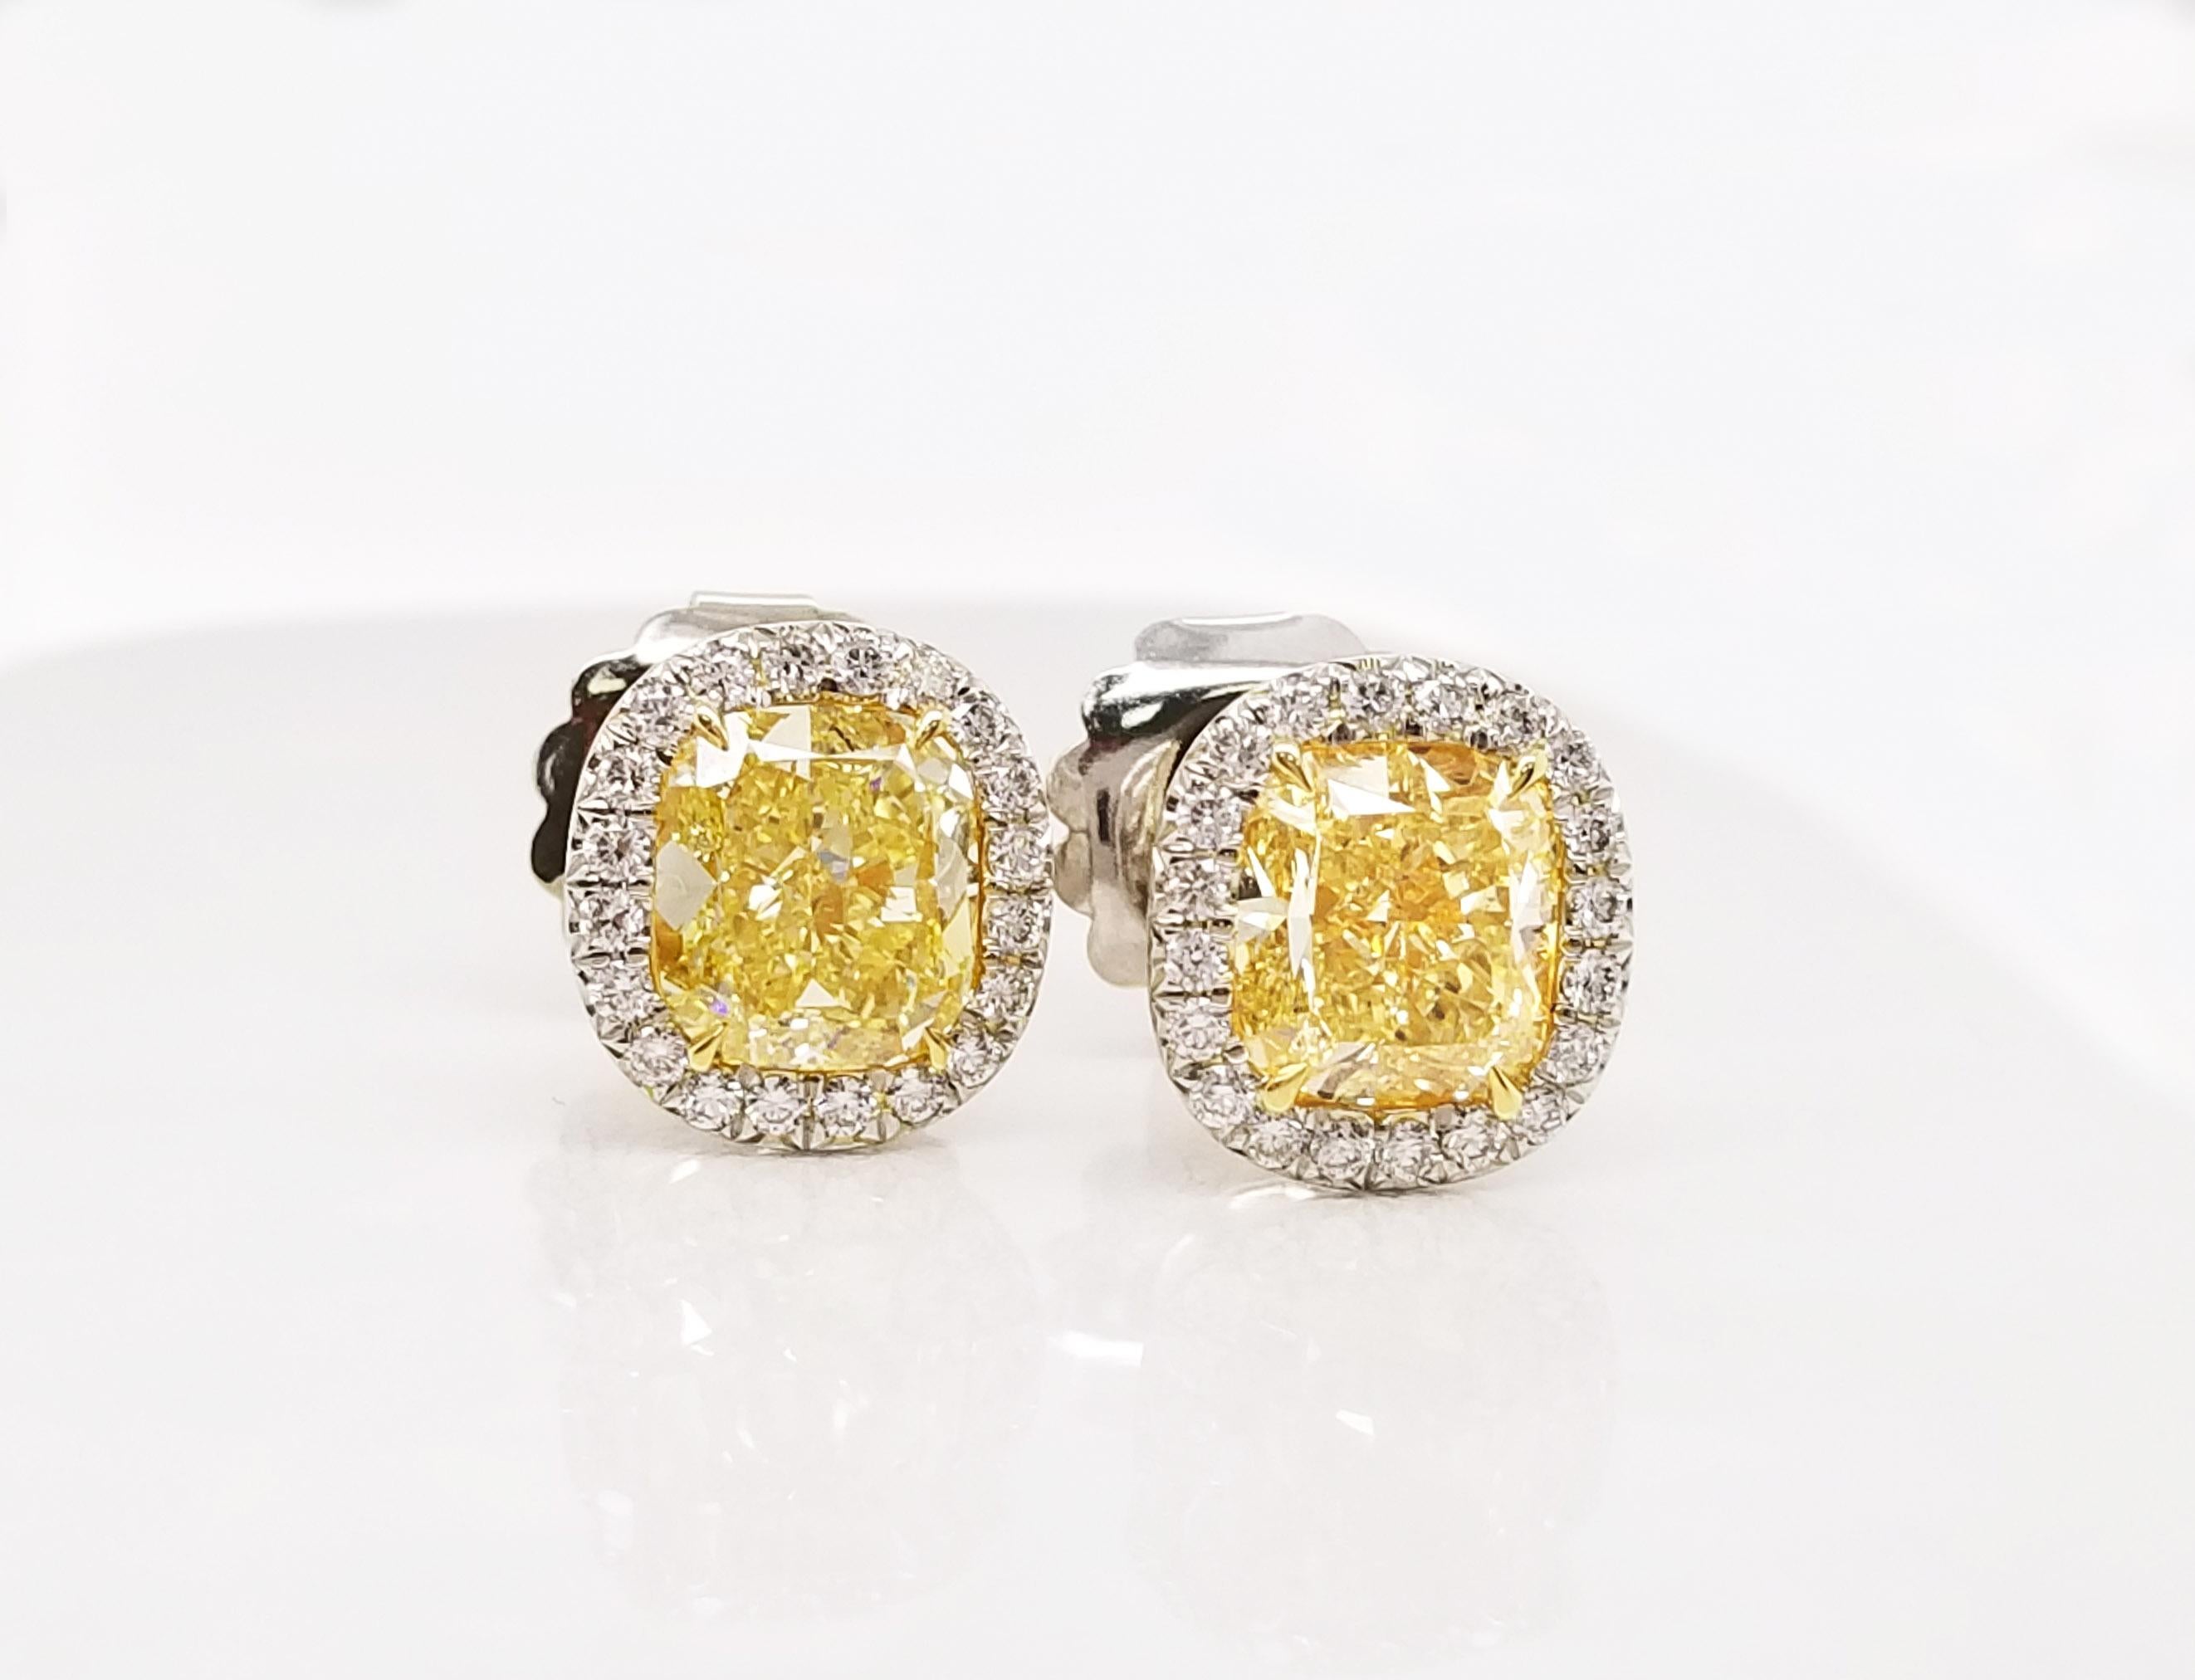 Scarselli Stud Platinum Earrings with 2 Carat Fancy Yellow Diamond Each GIA (Zeitgenössisch)